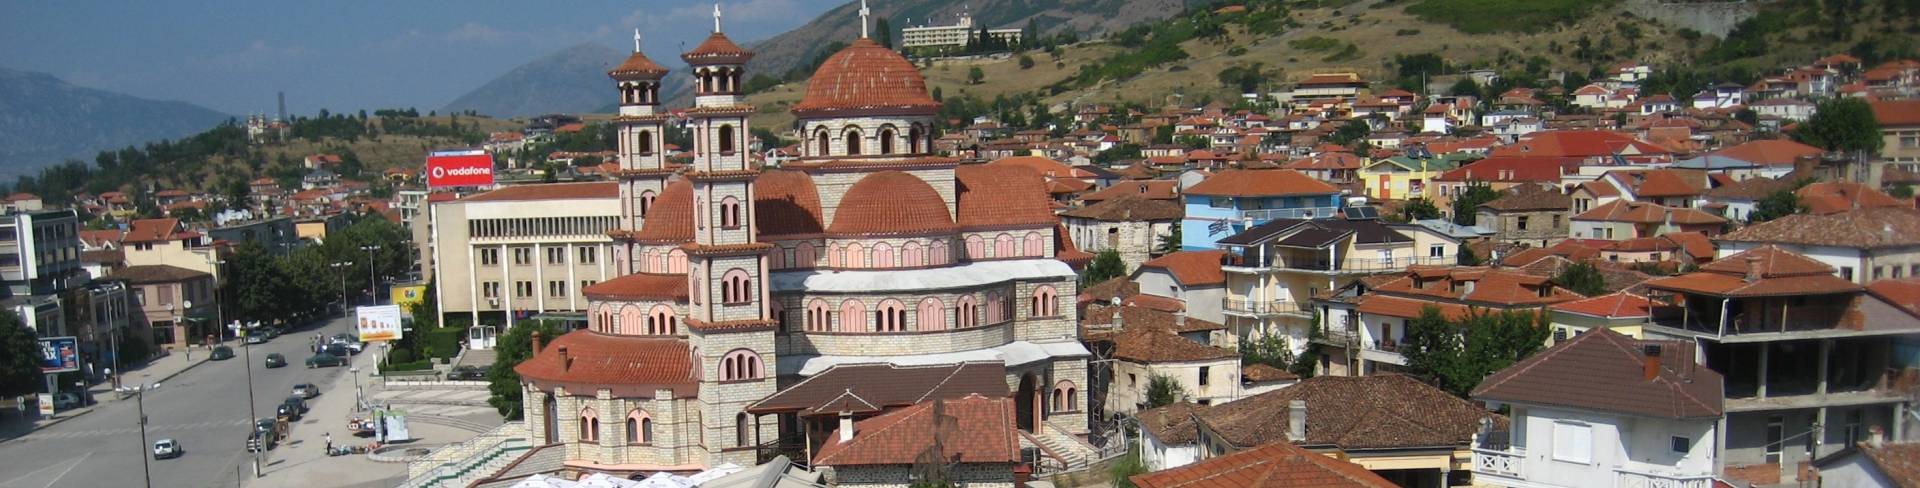 Корча - город в Албании